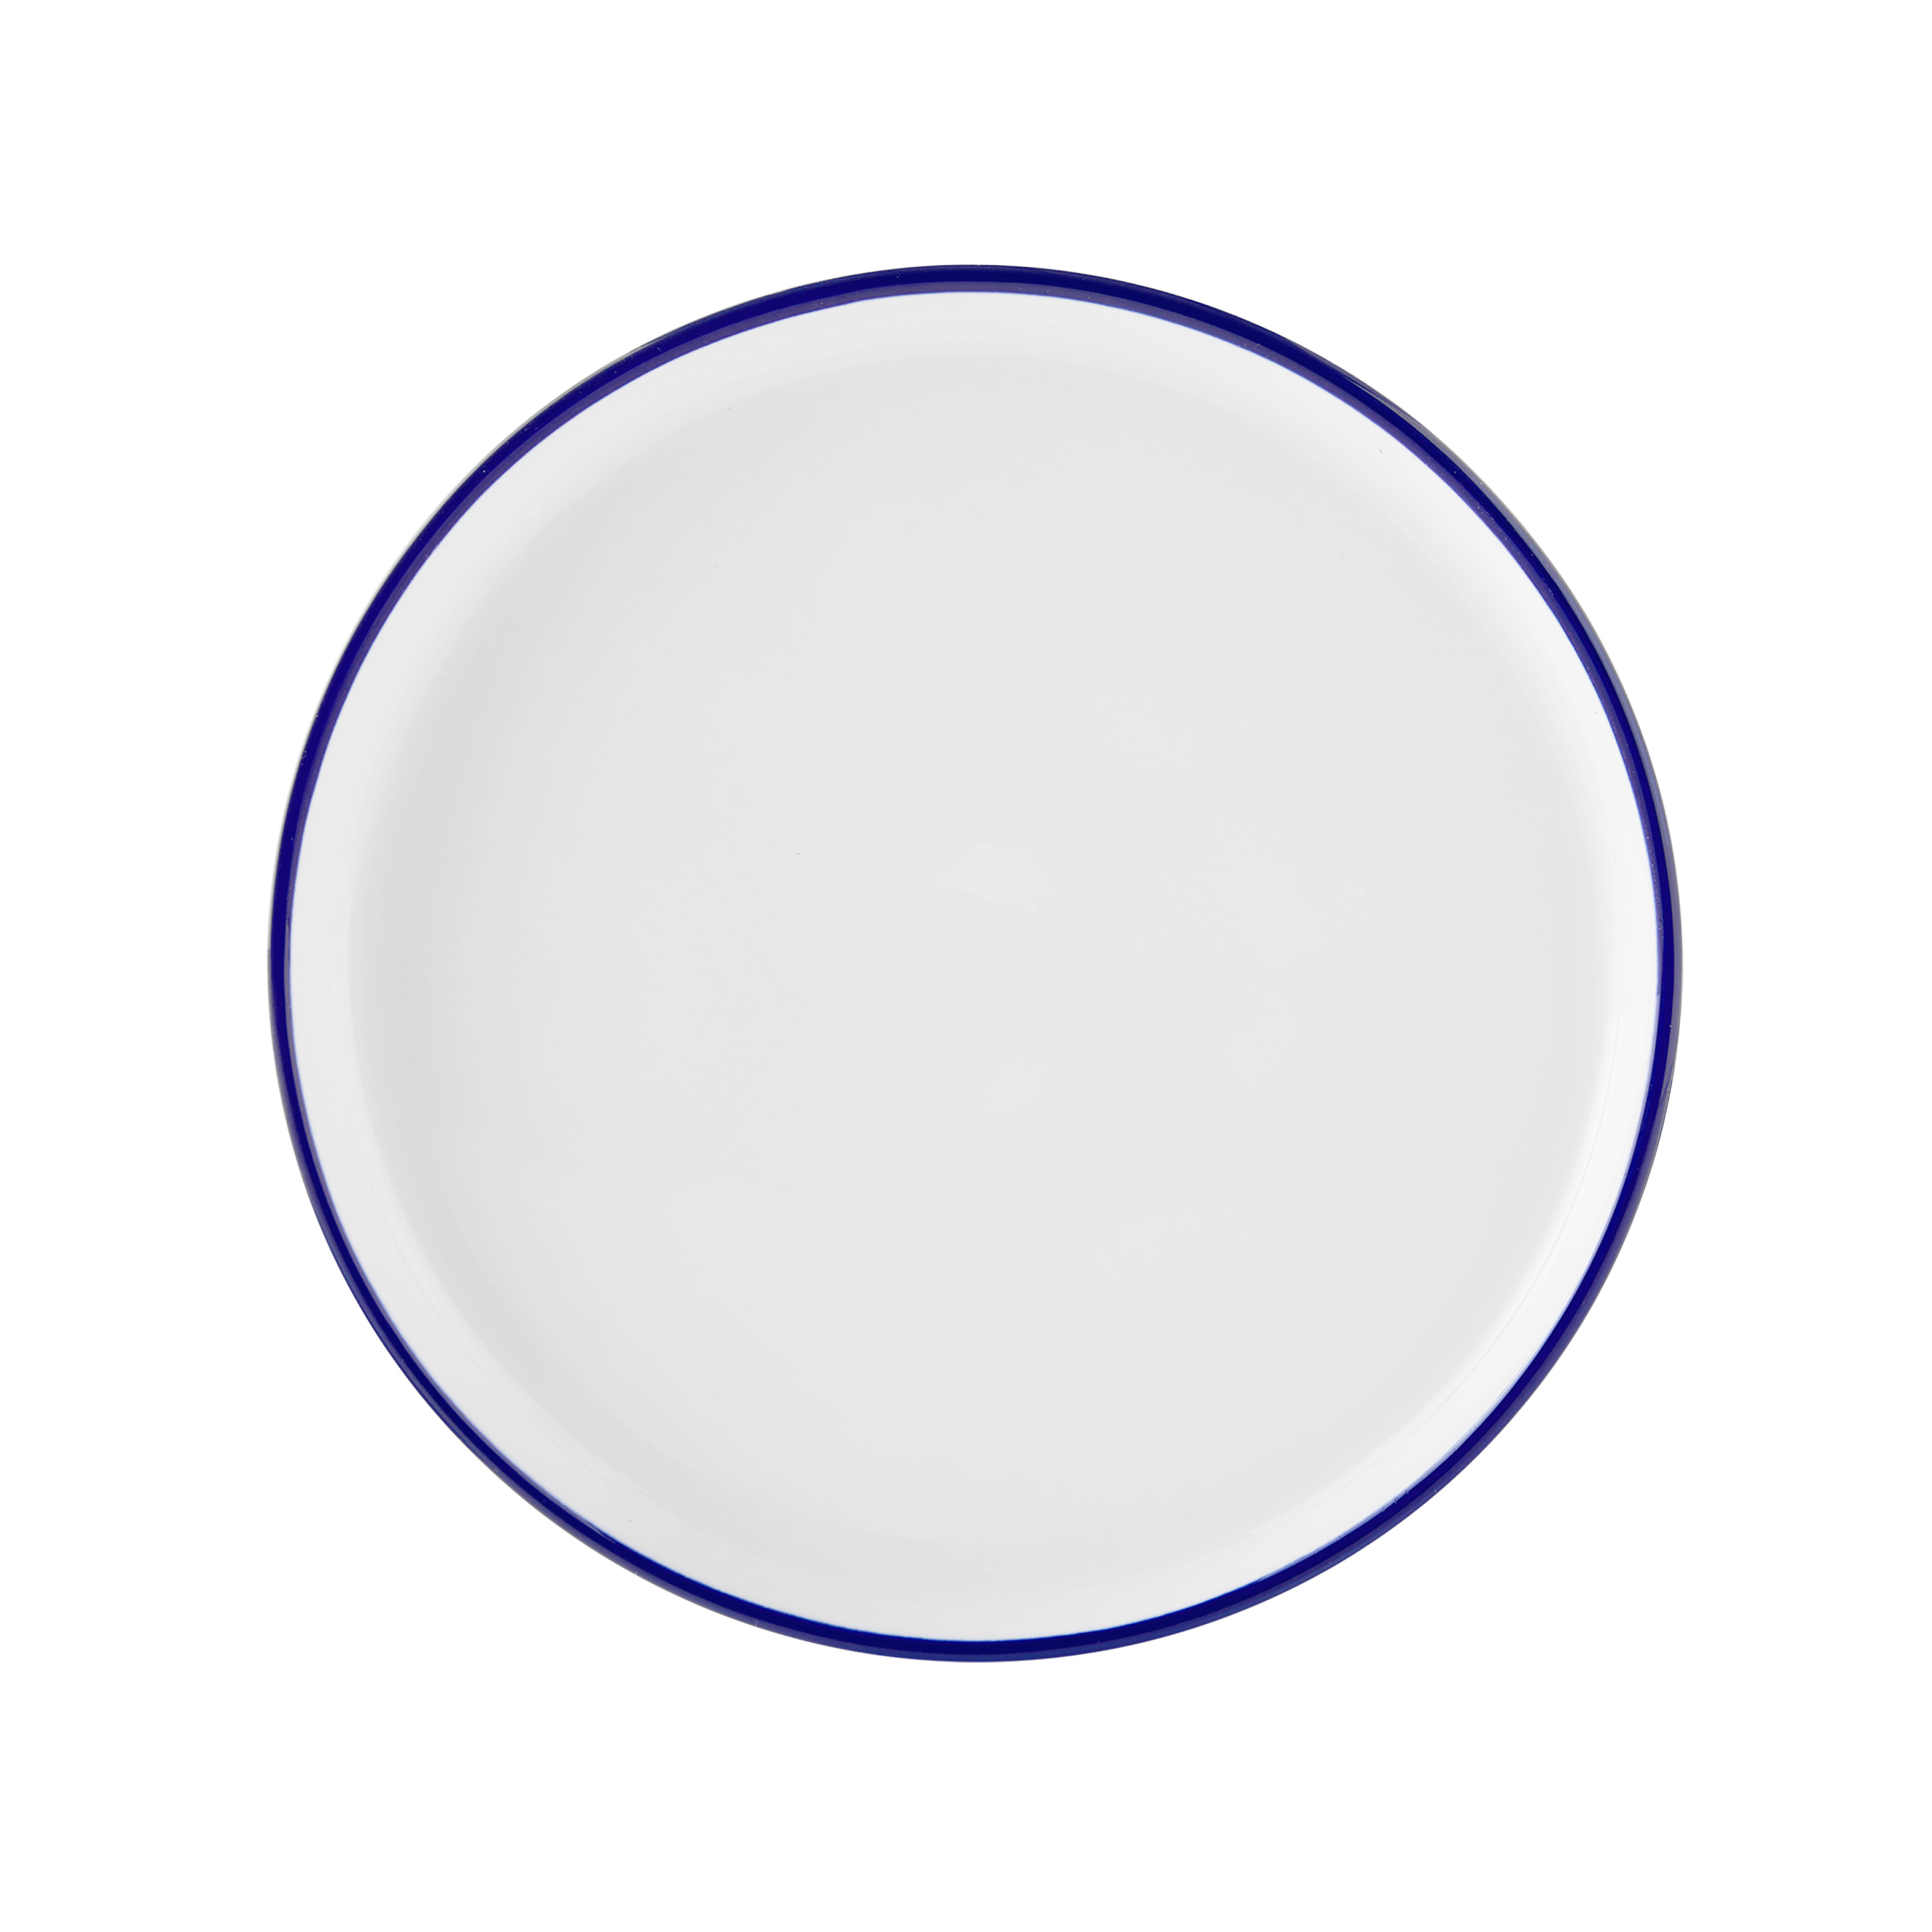 Mainstays 12-Piece Blue Rim Stoneware Dinnerware Set - image 5 of 7